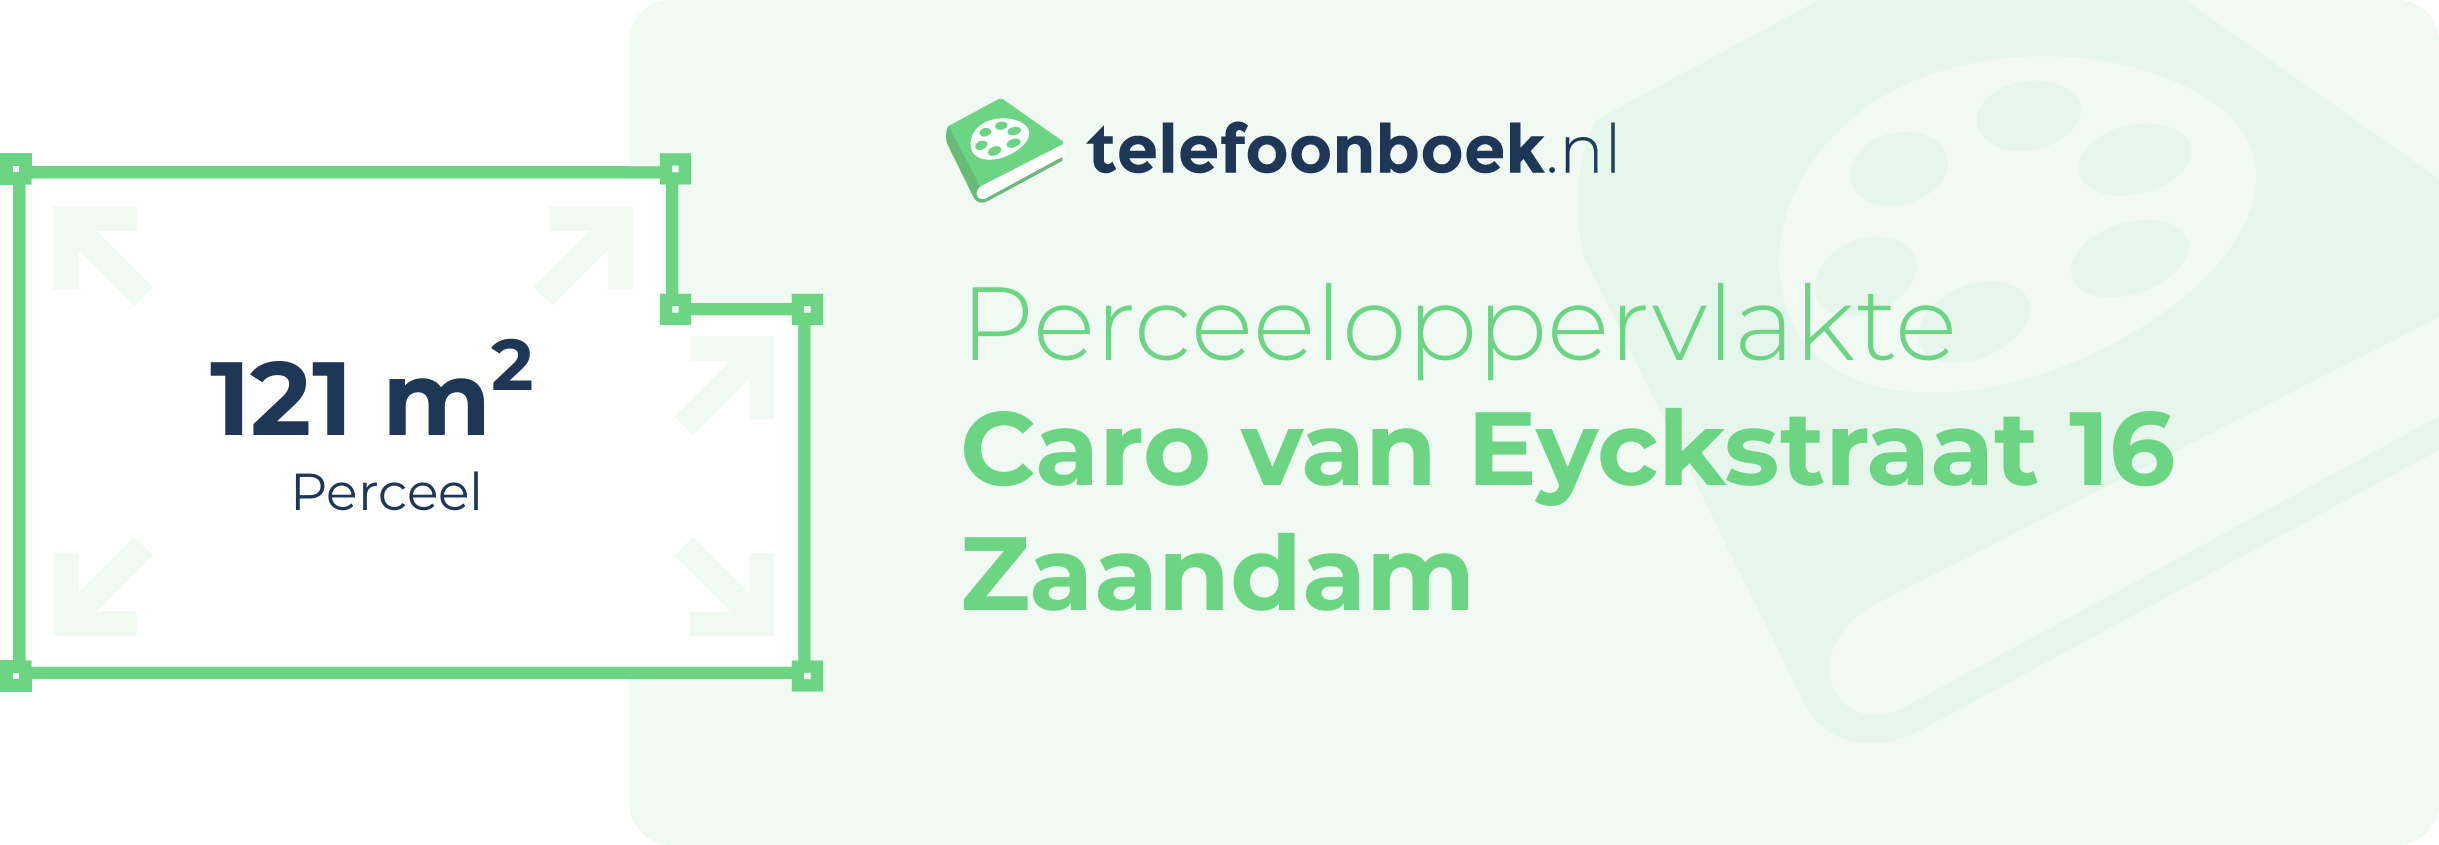 Perceeloppervlakte Caro Van Eyckstraat 16 Zaandam